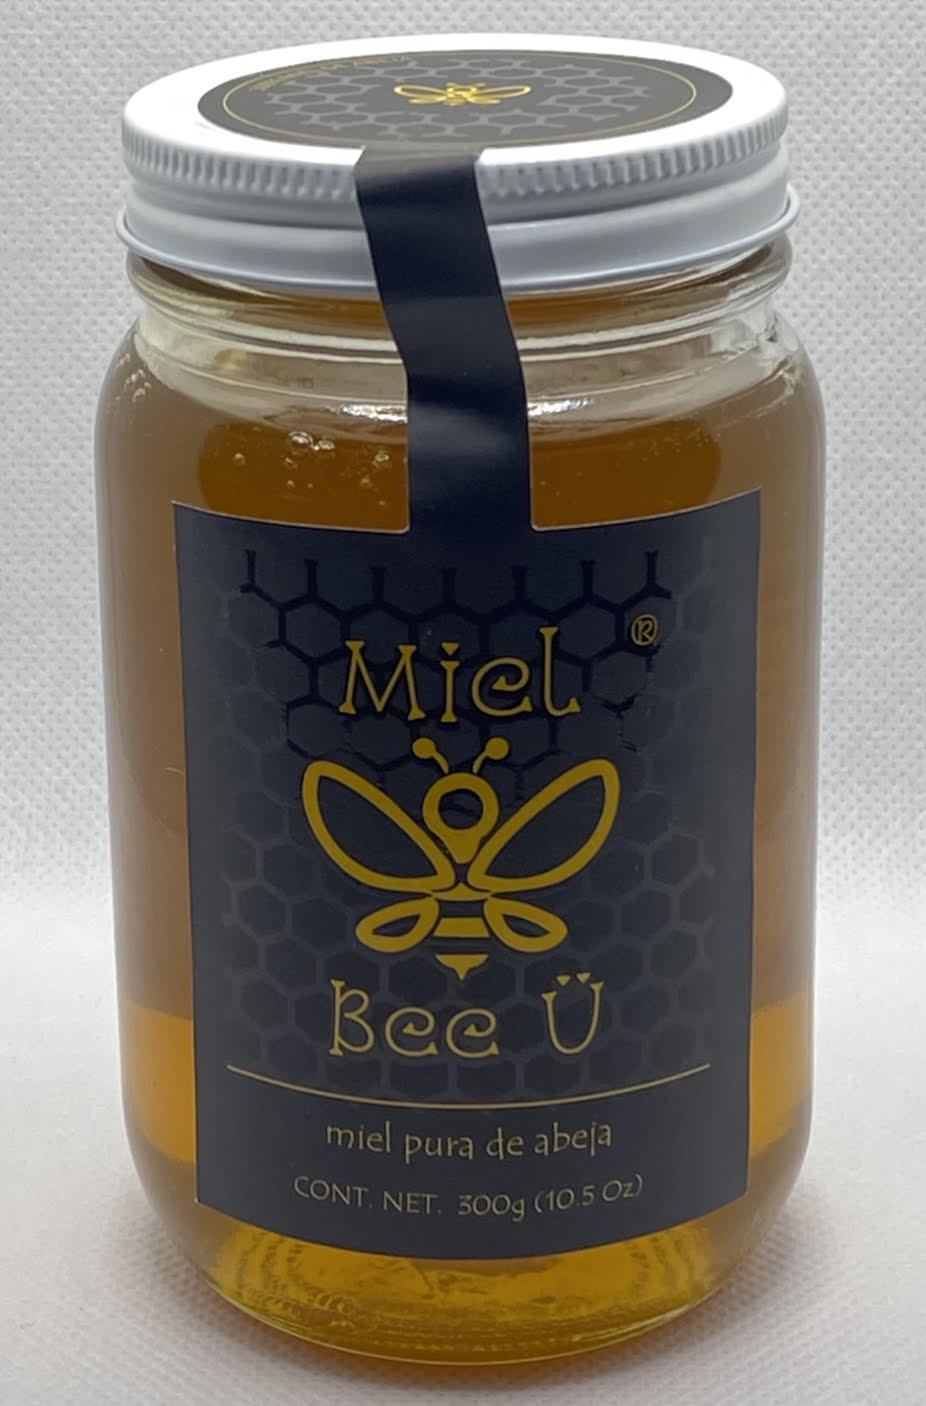 Miel 100% Pura De Abeja, Multiflora Tipo Mantequilla 580g